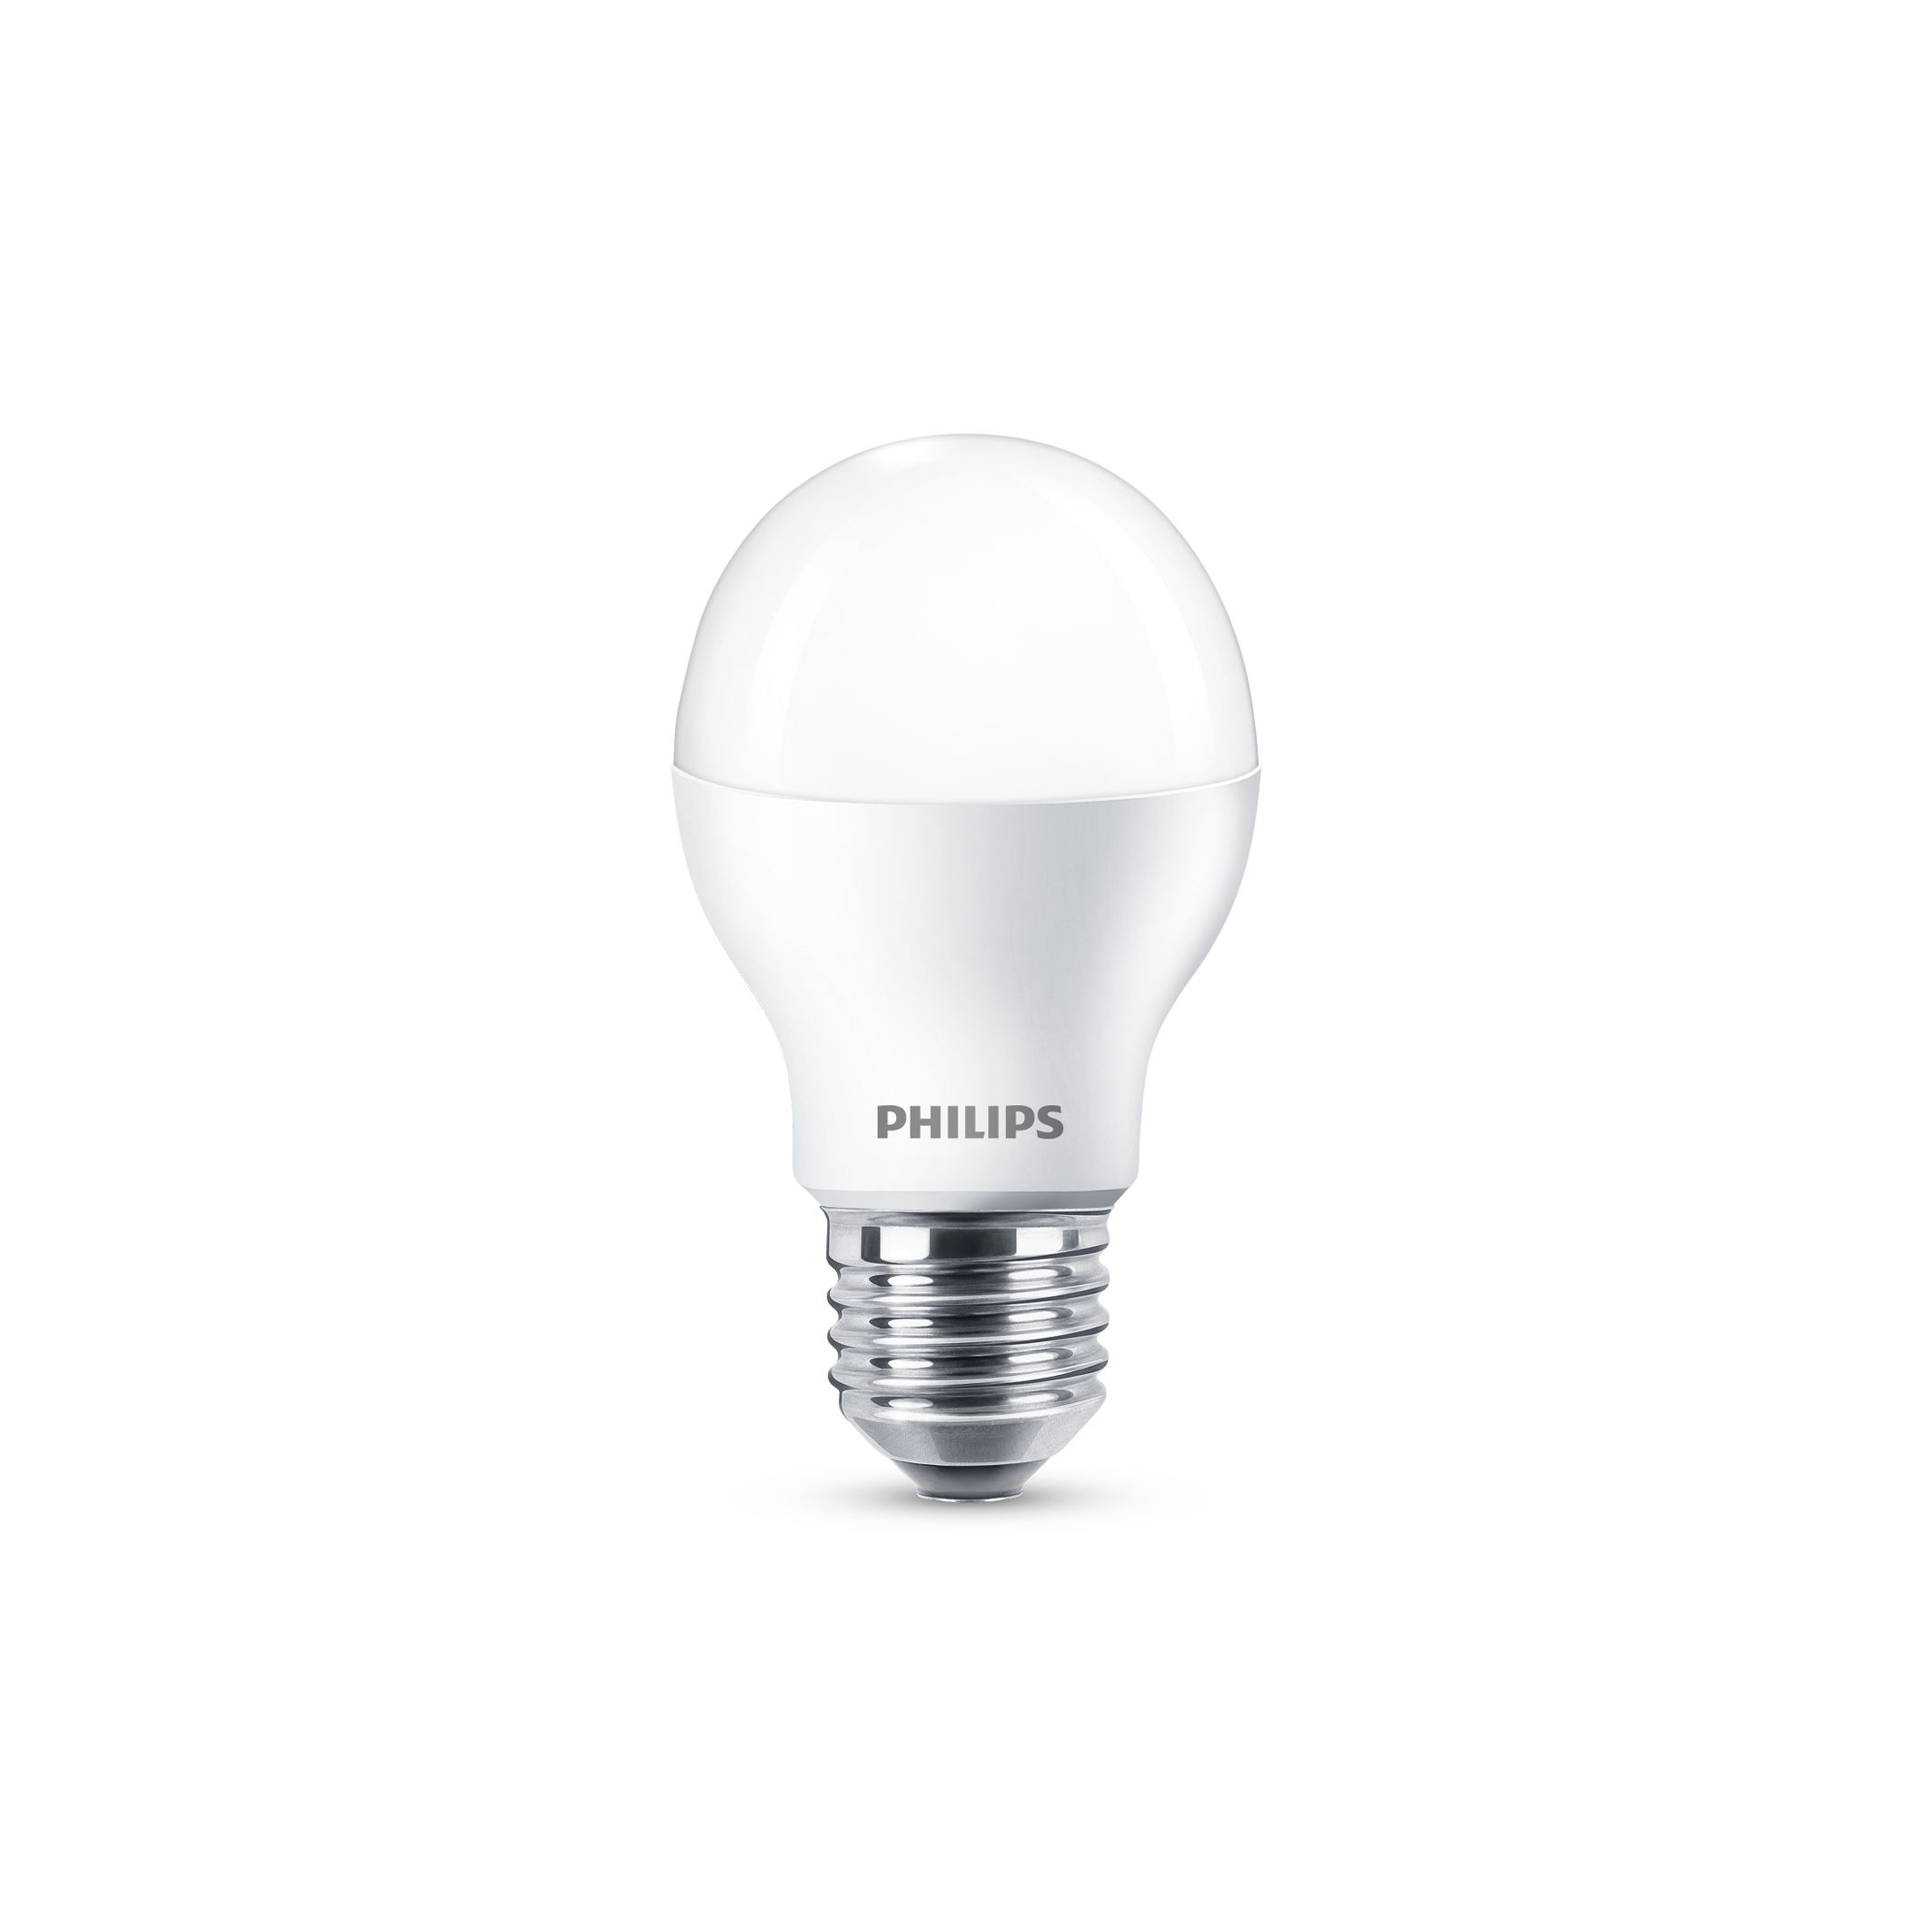 Original Philips 9W LED Lamp Essential Bulb E27 720Lm 1PC 3PC 6500K 3000K 